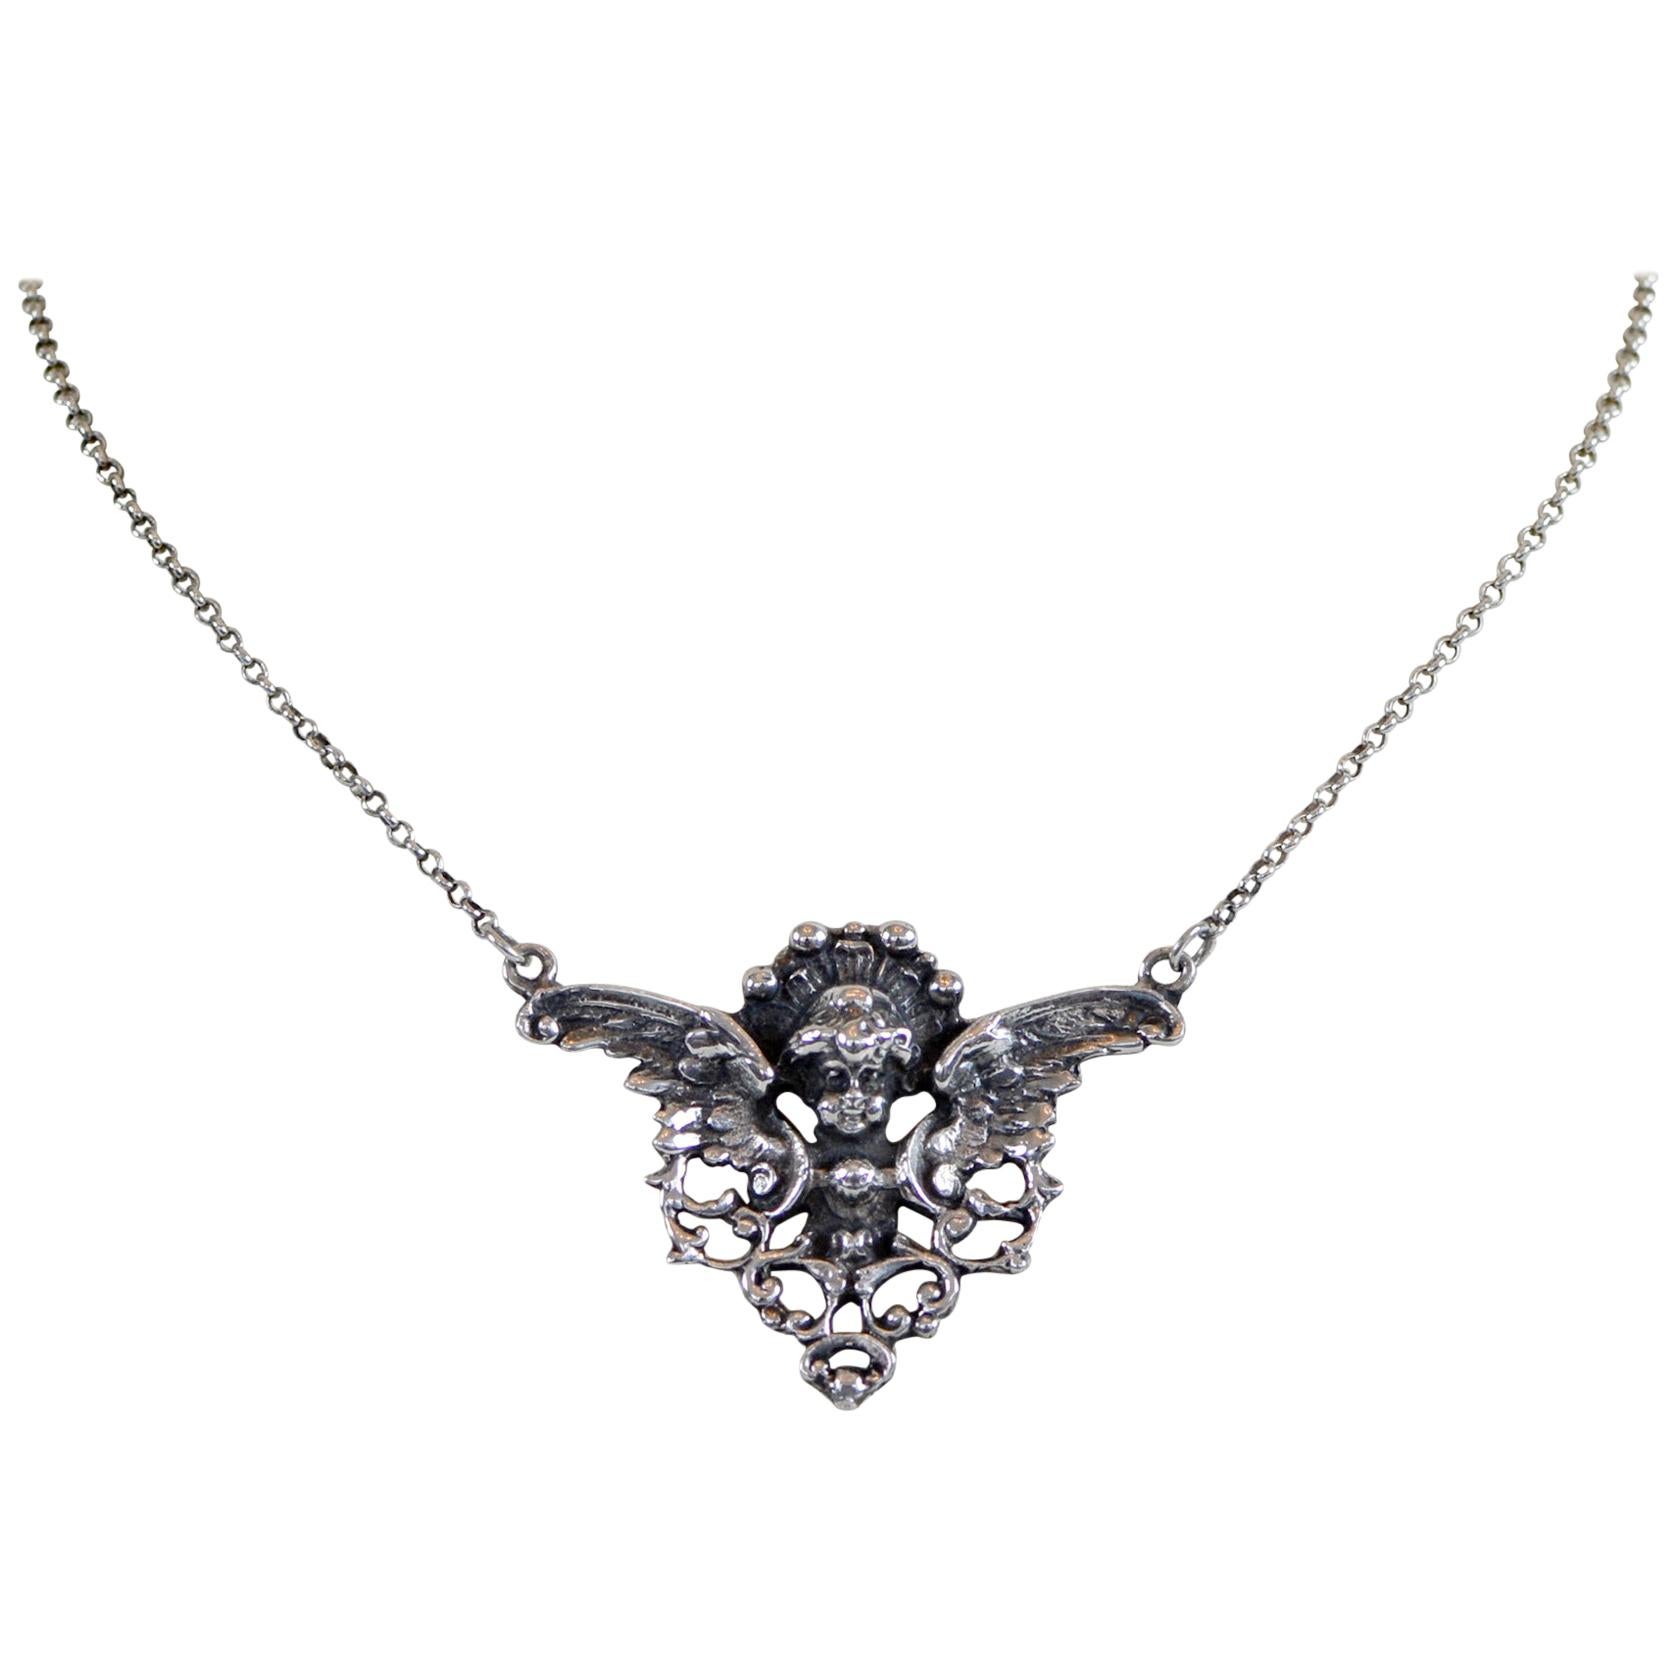 Jill Garber Rococo Winged Archangel Michael Pendant Necklace in Sterling Silver